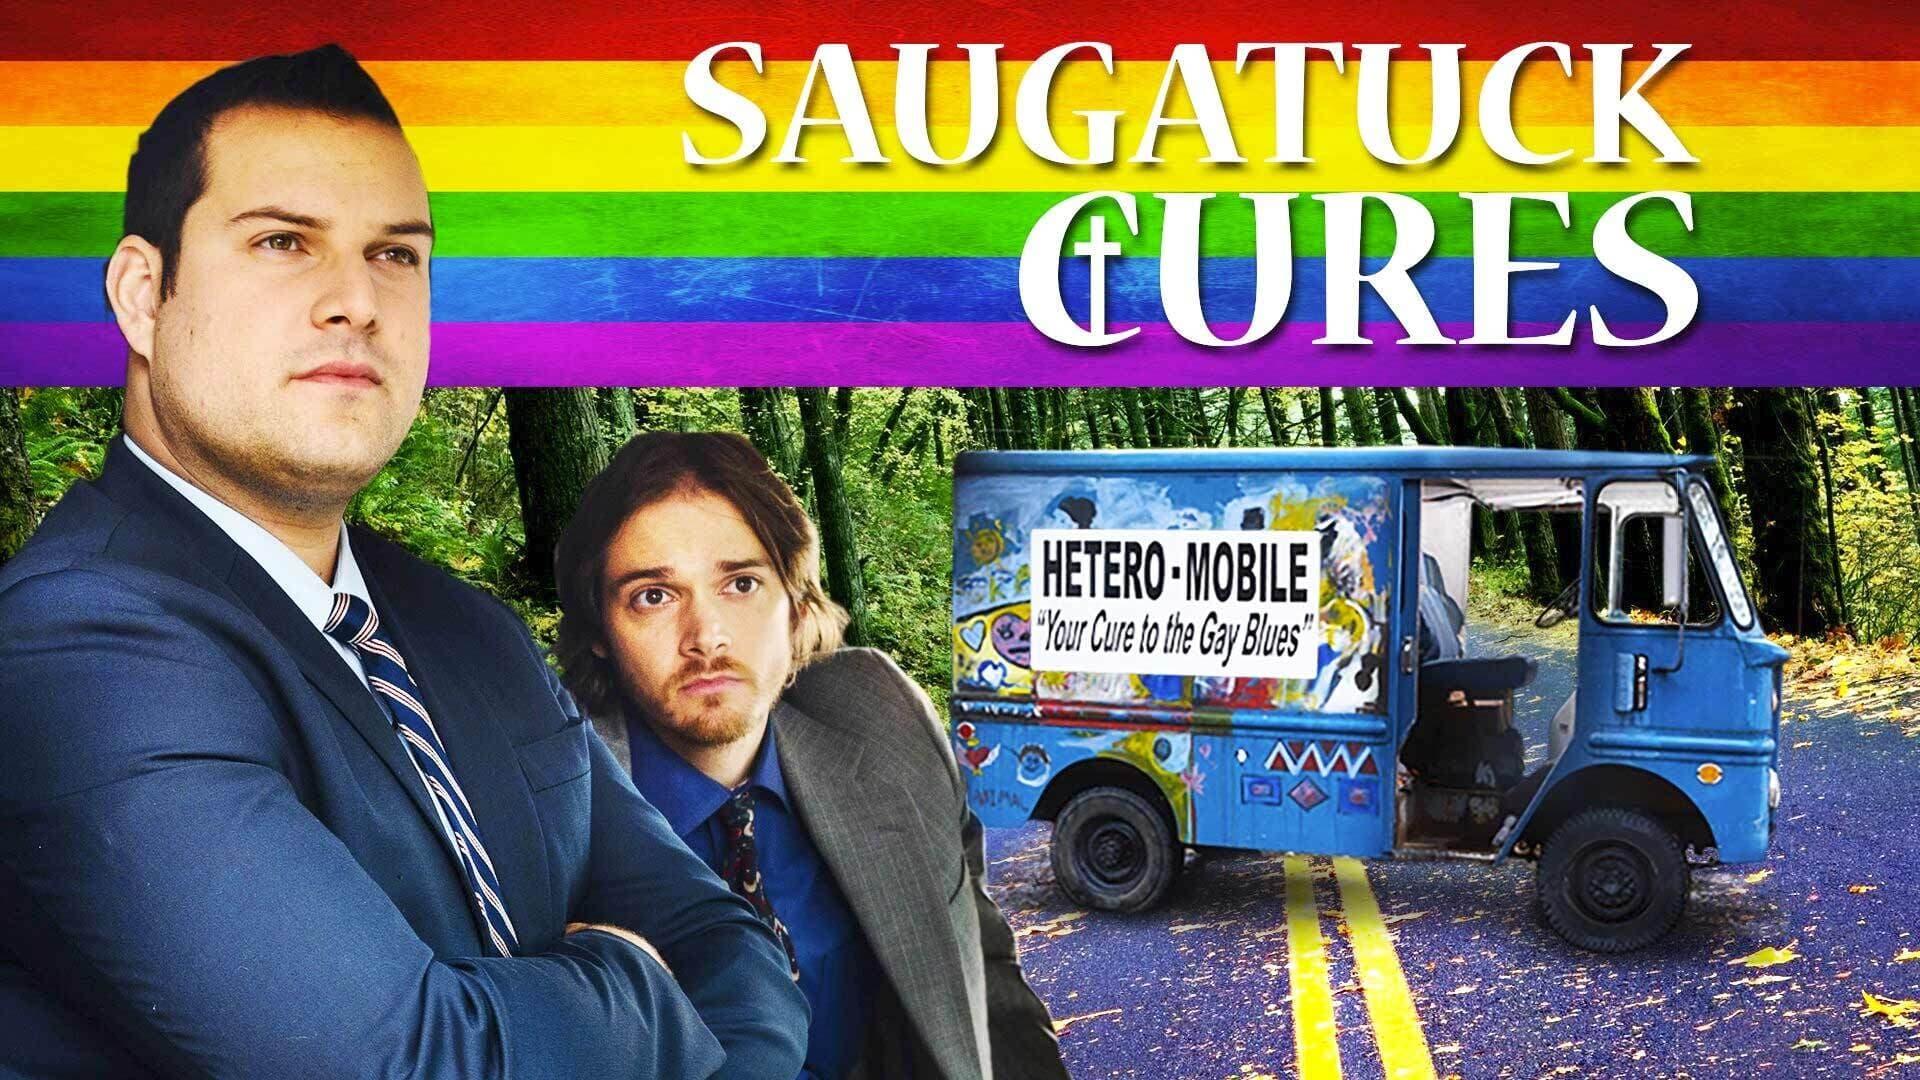 Saugatuck Cures backdrop